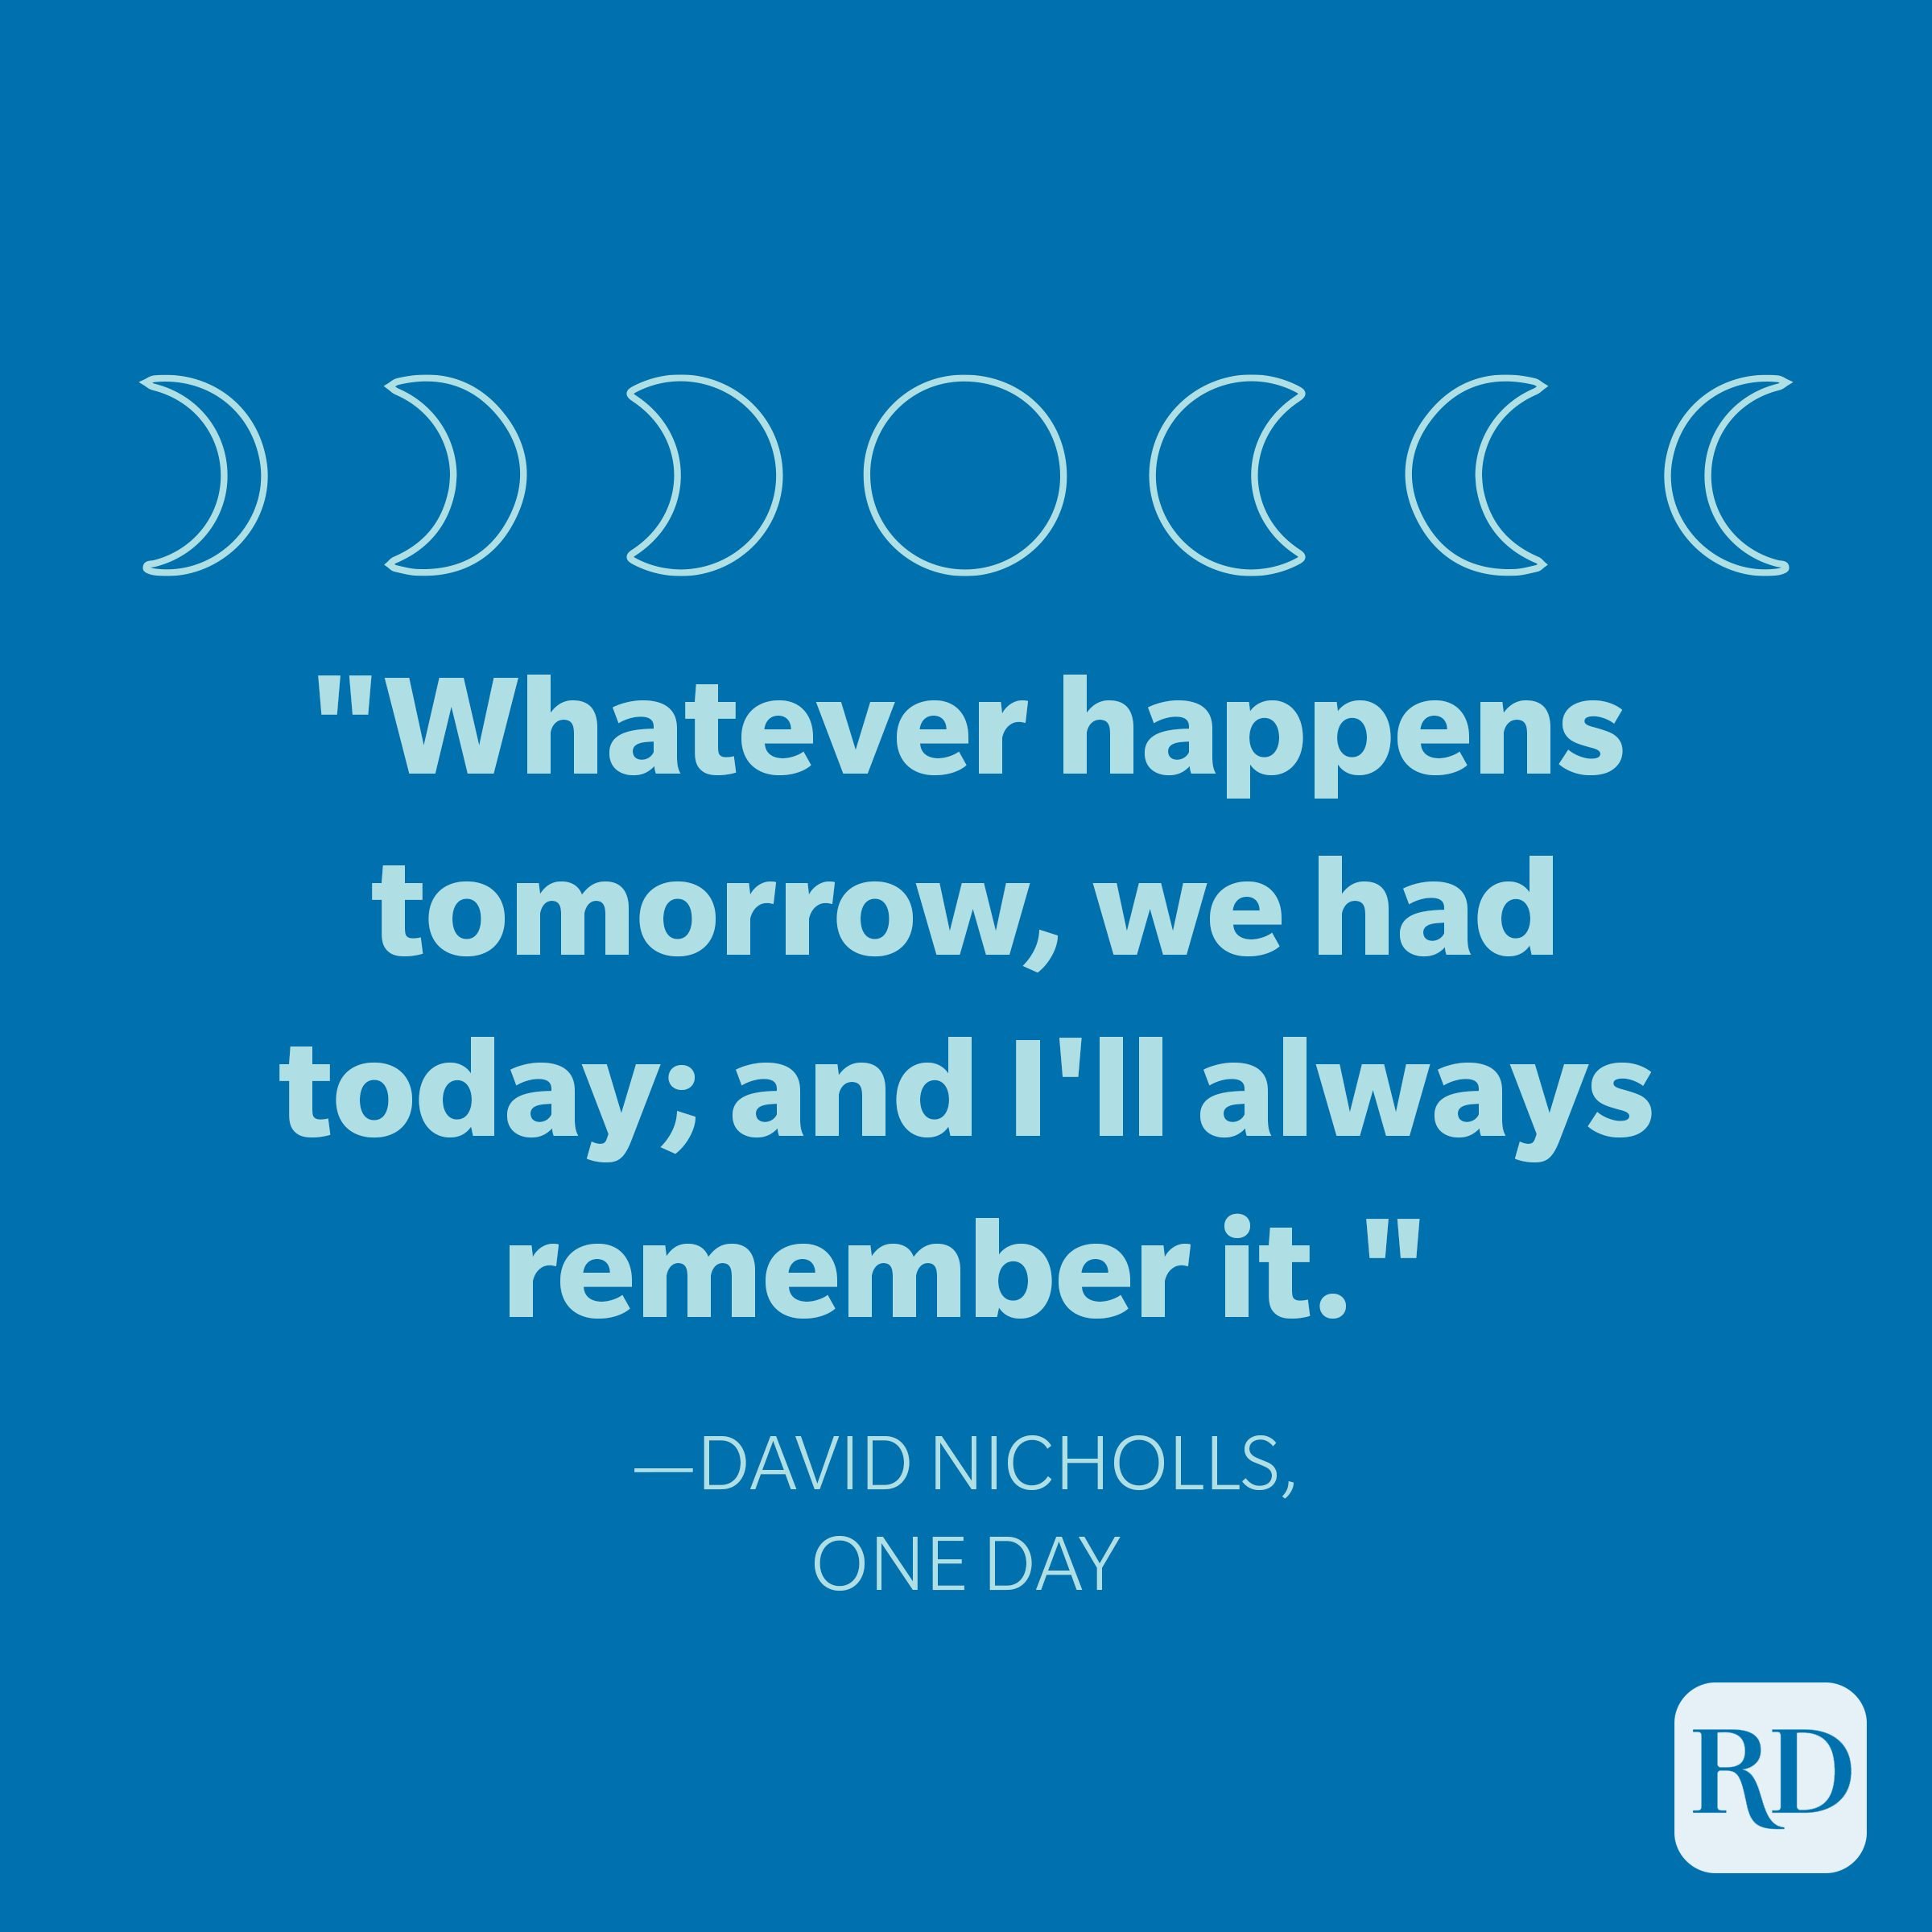 David Nicholls Goodnight Quote